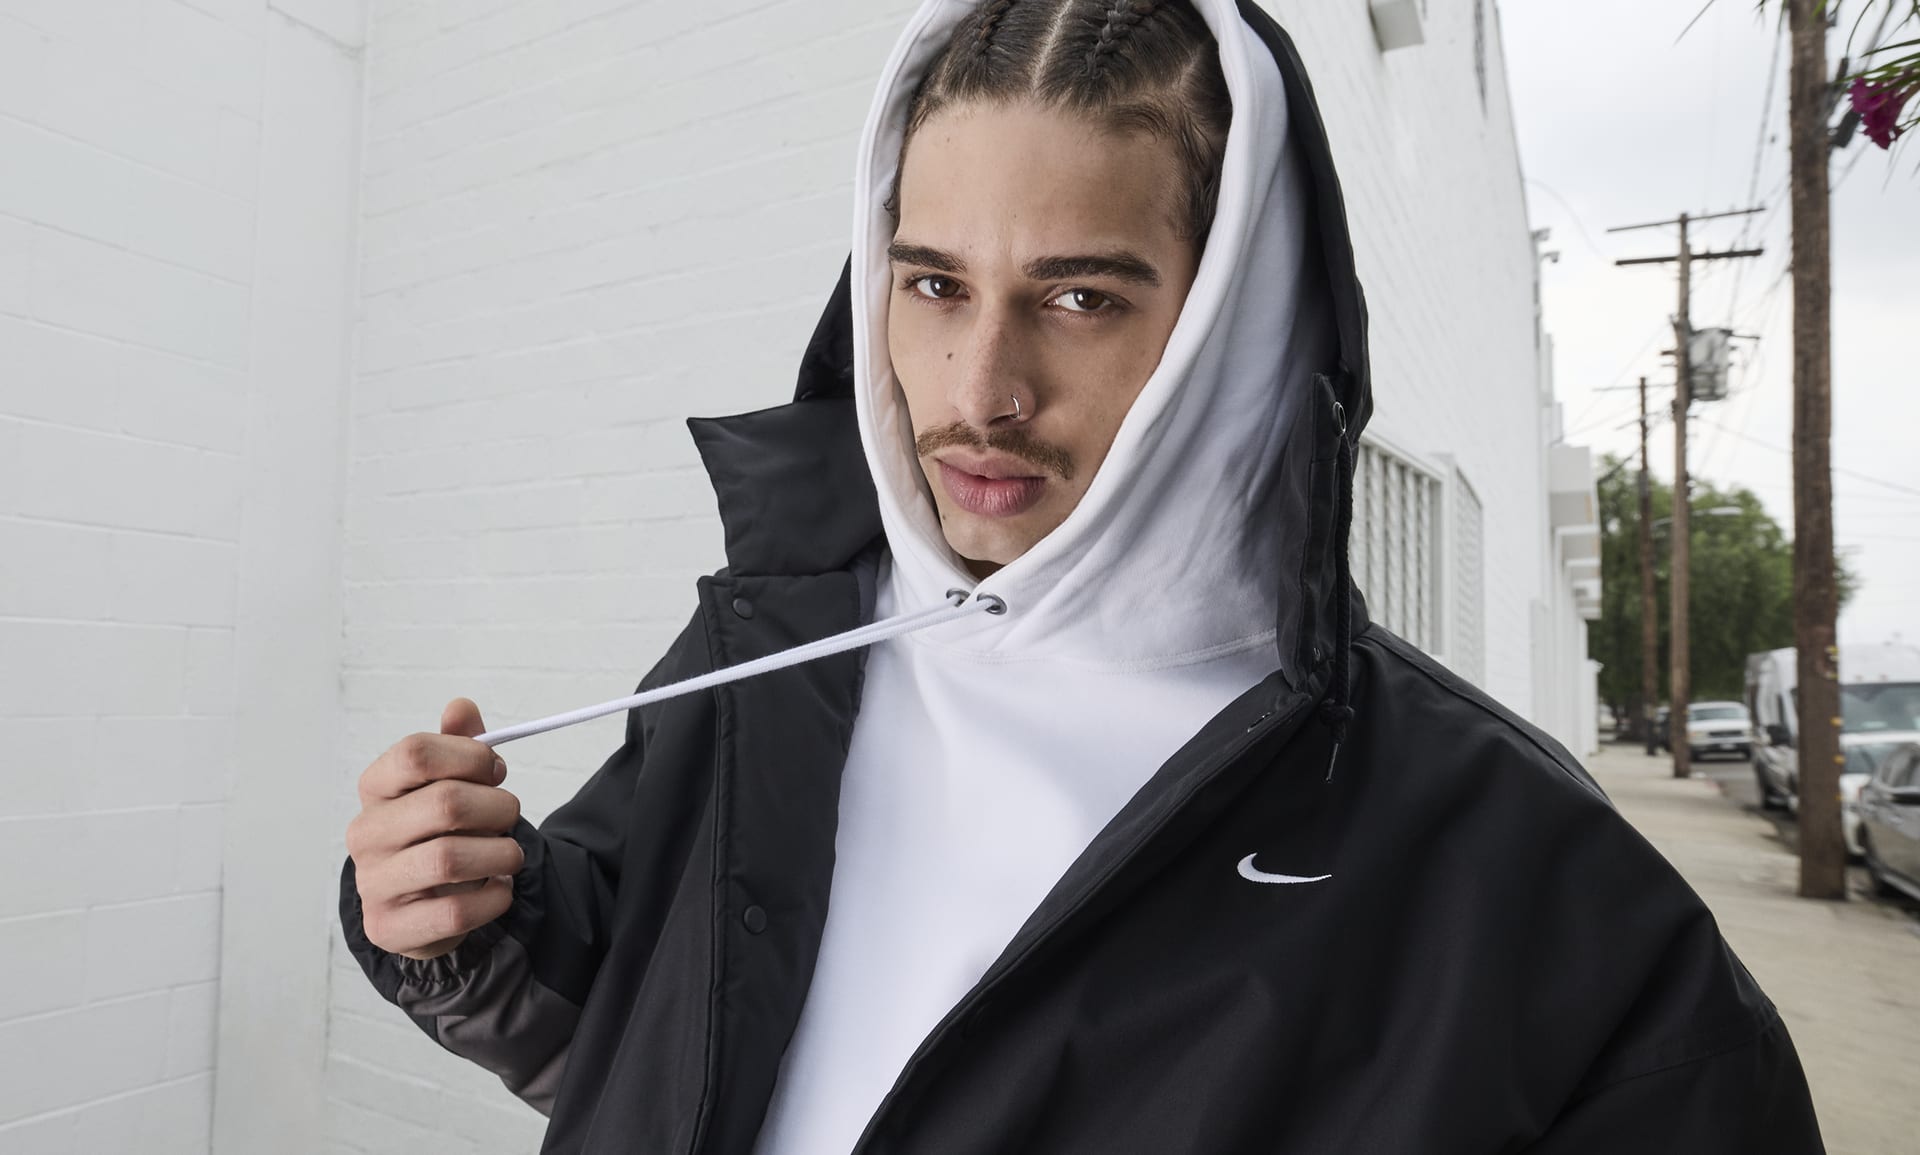 Nike Solo Swoosh Puffer Jacket » Buy online now!